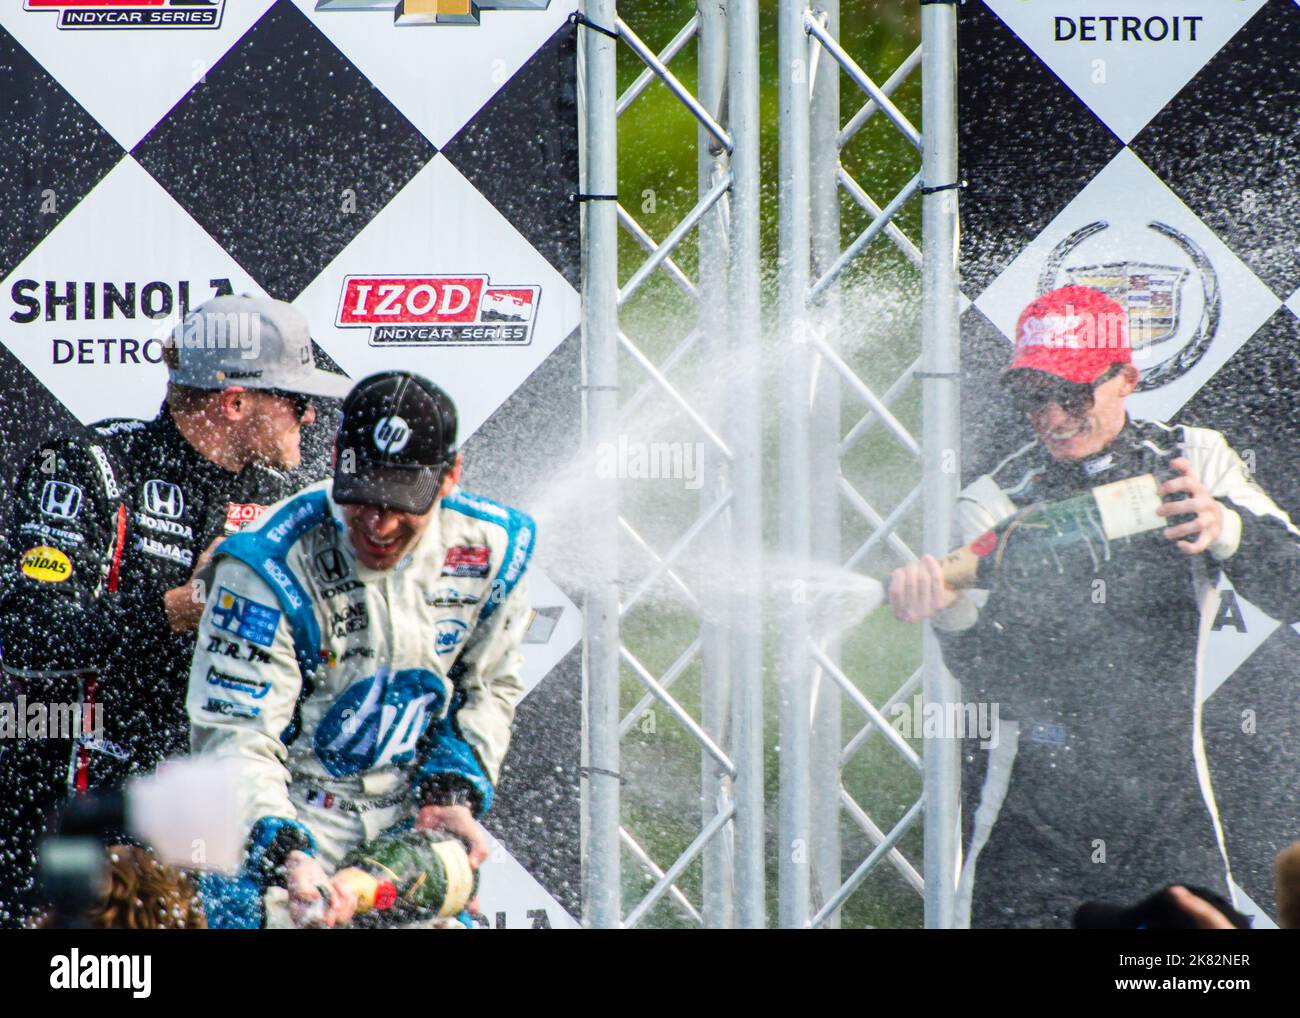 DETROIT, MI/USA - 2 DE JUNIO de 2013: Chevrolet Indy Dual en Detroit II Círculo de Ganadores: James Jakes - 2nd; Simon Pagenaud - 1st; Mike Conway - 3rd. Foto de stock